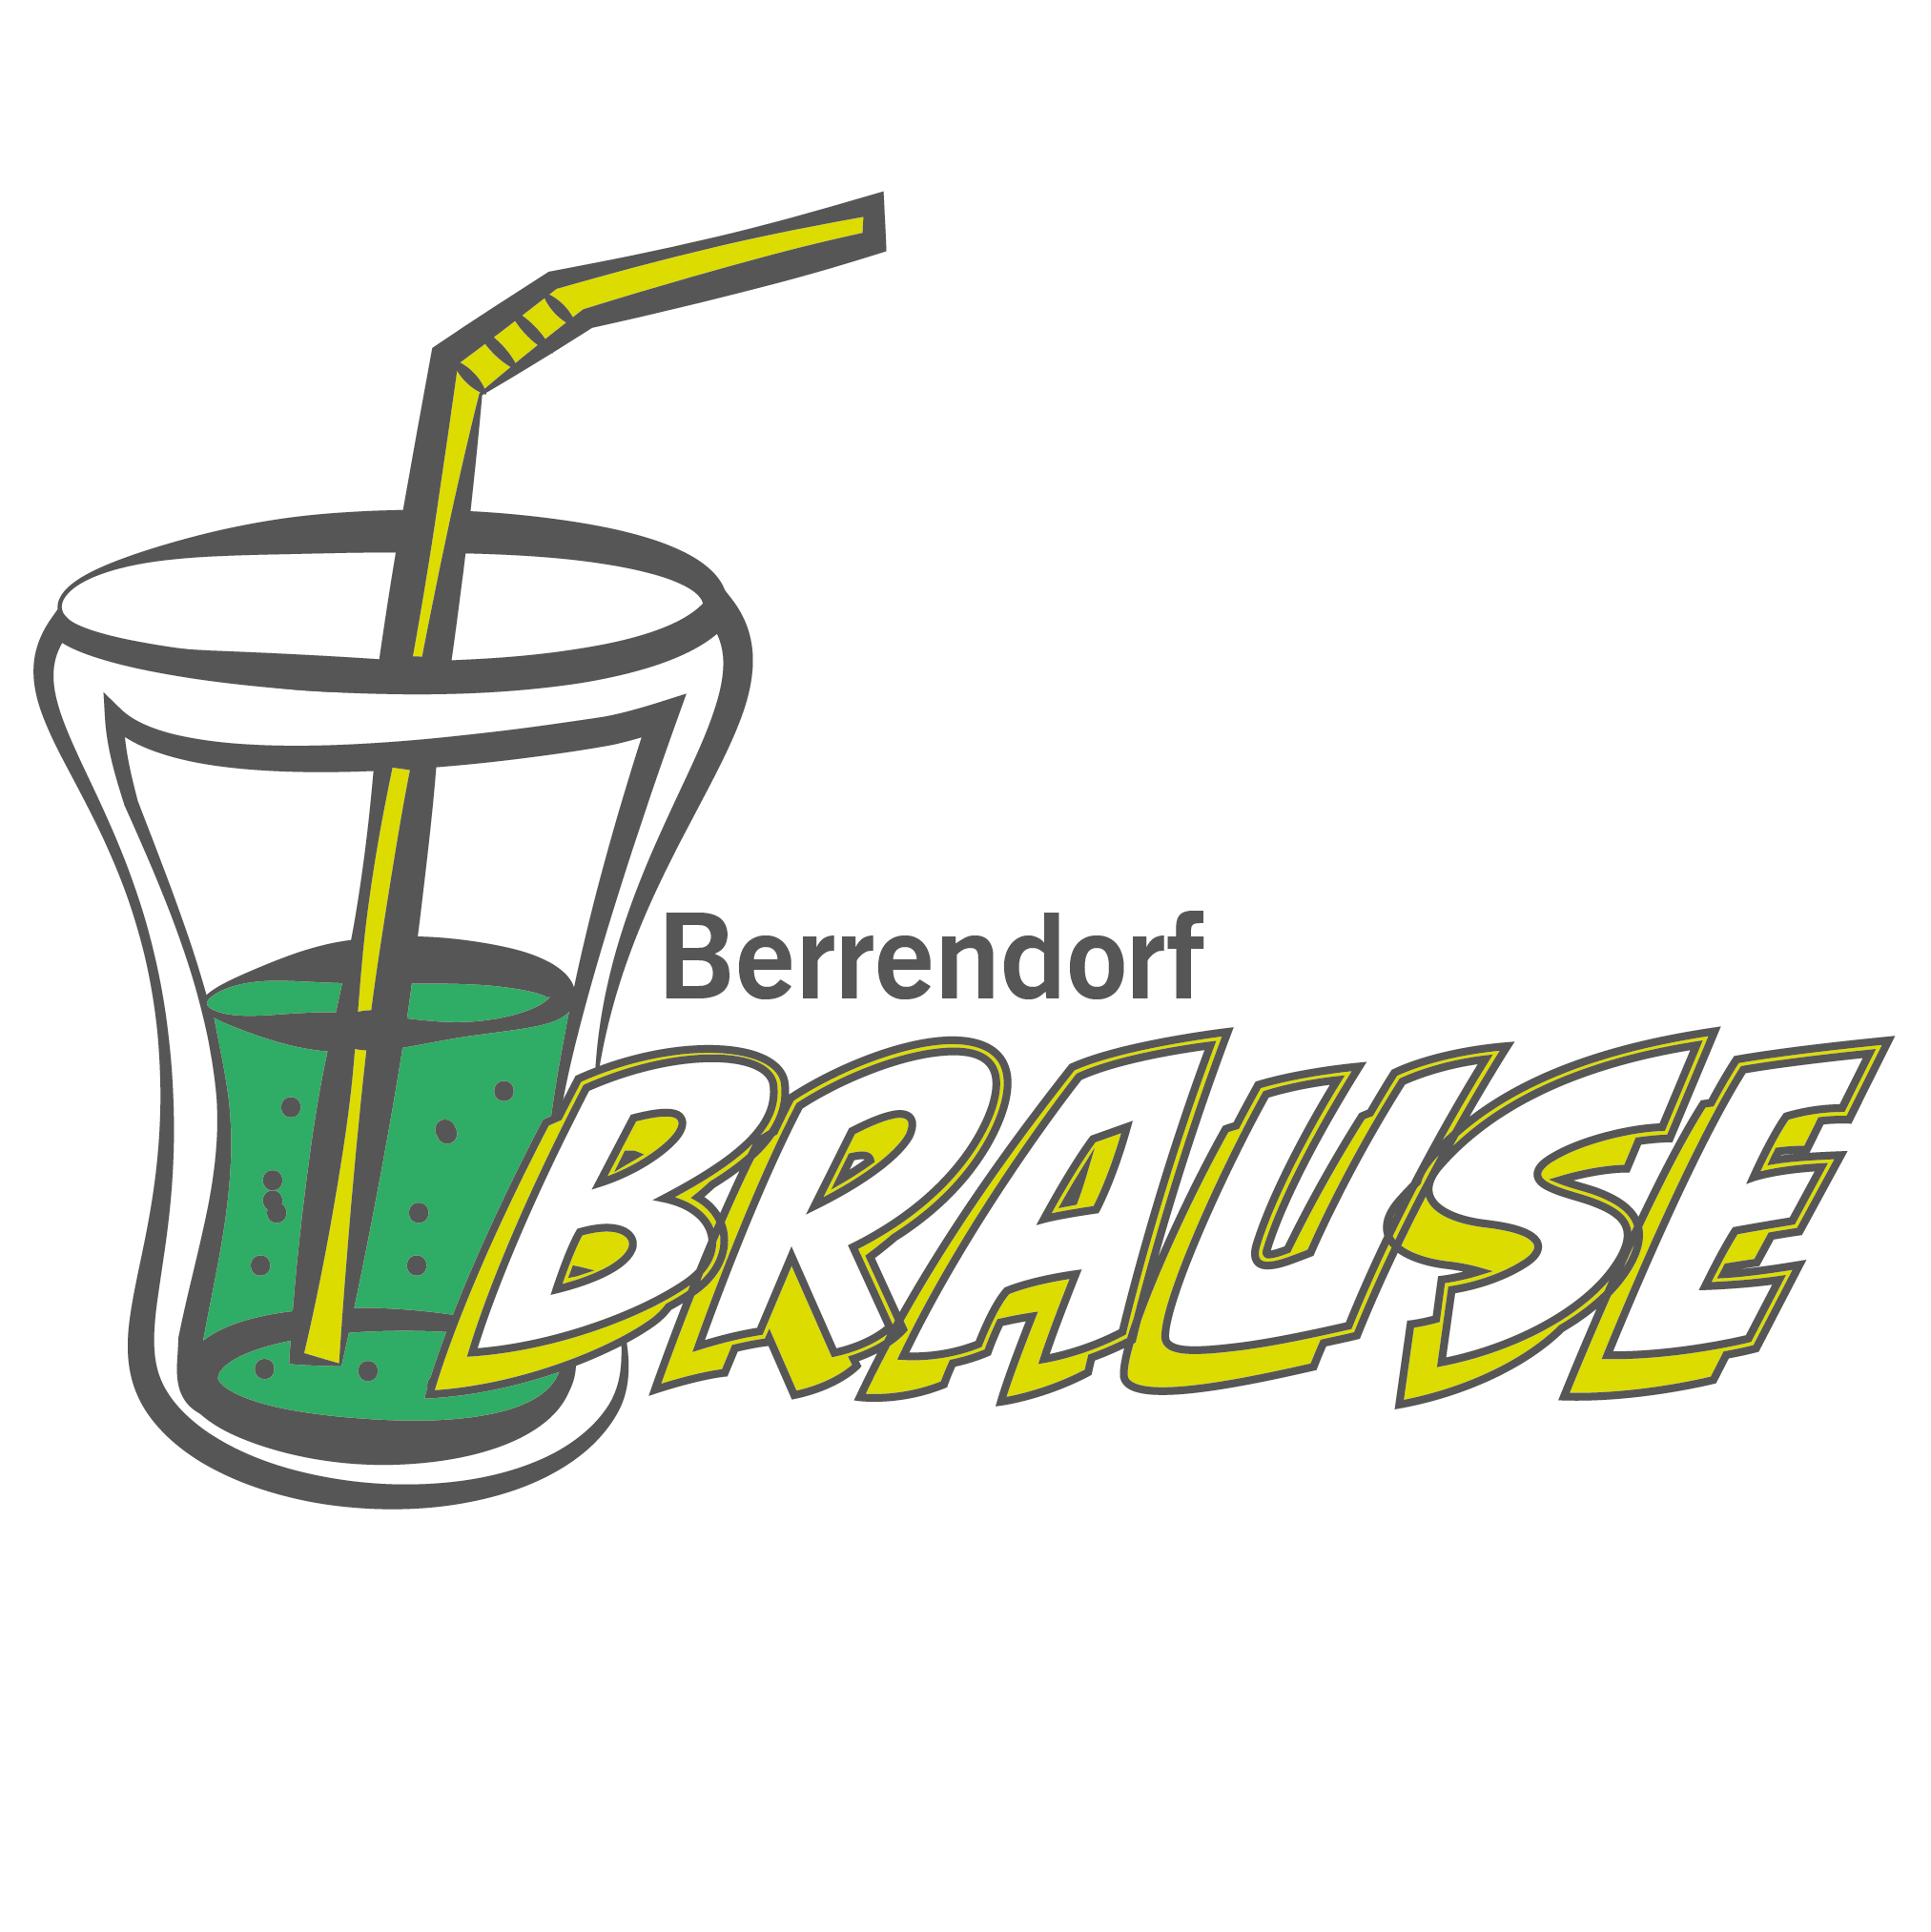 Brause Berrendorf